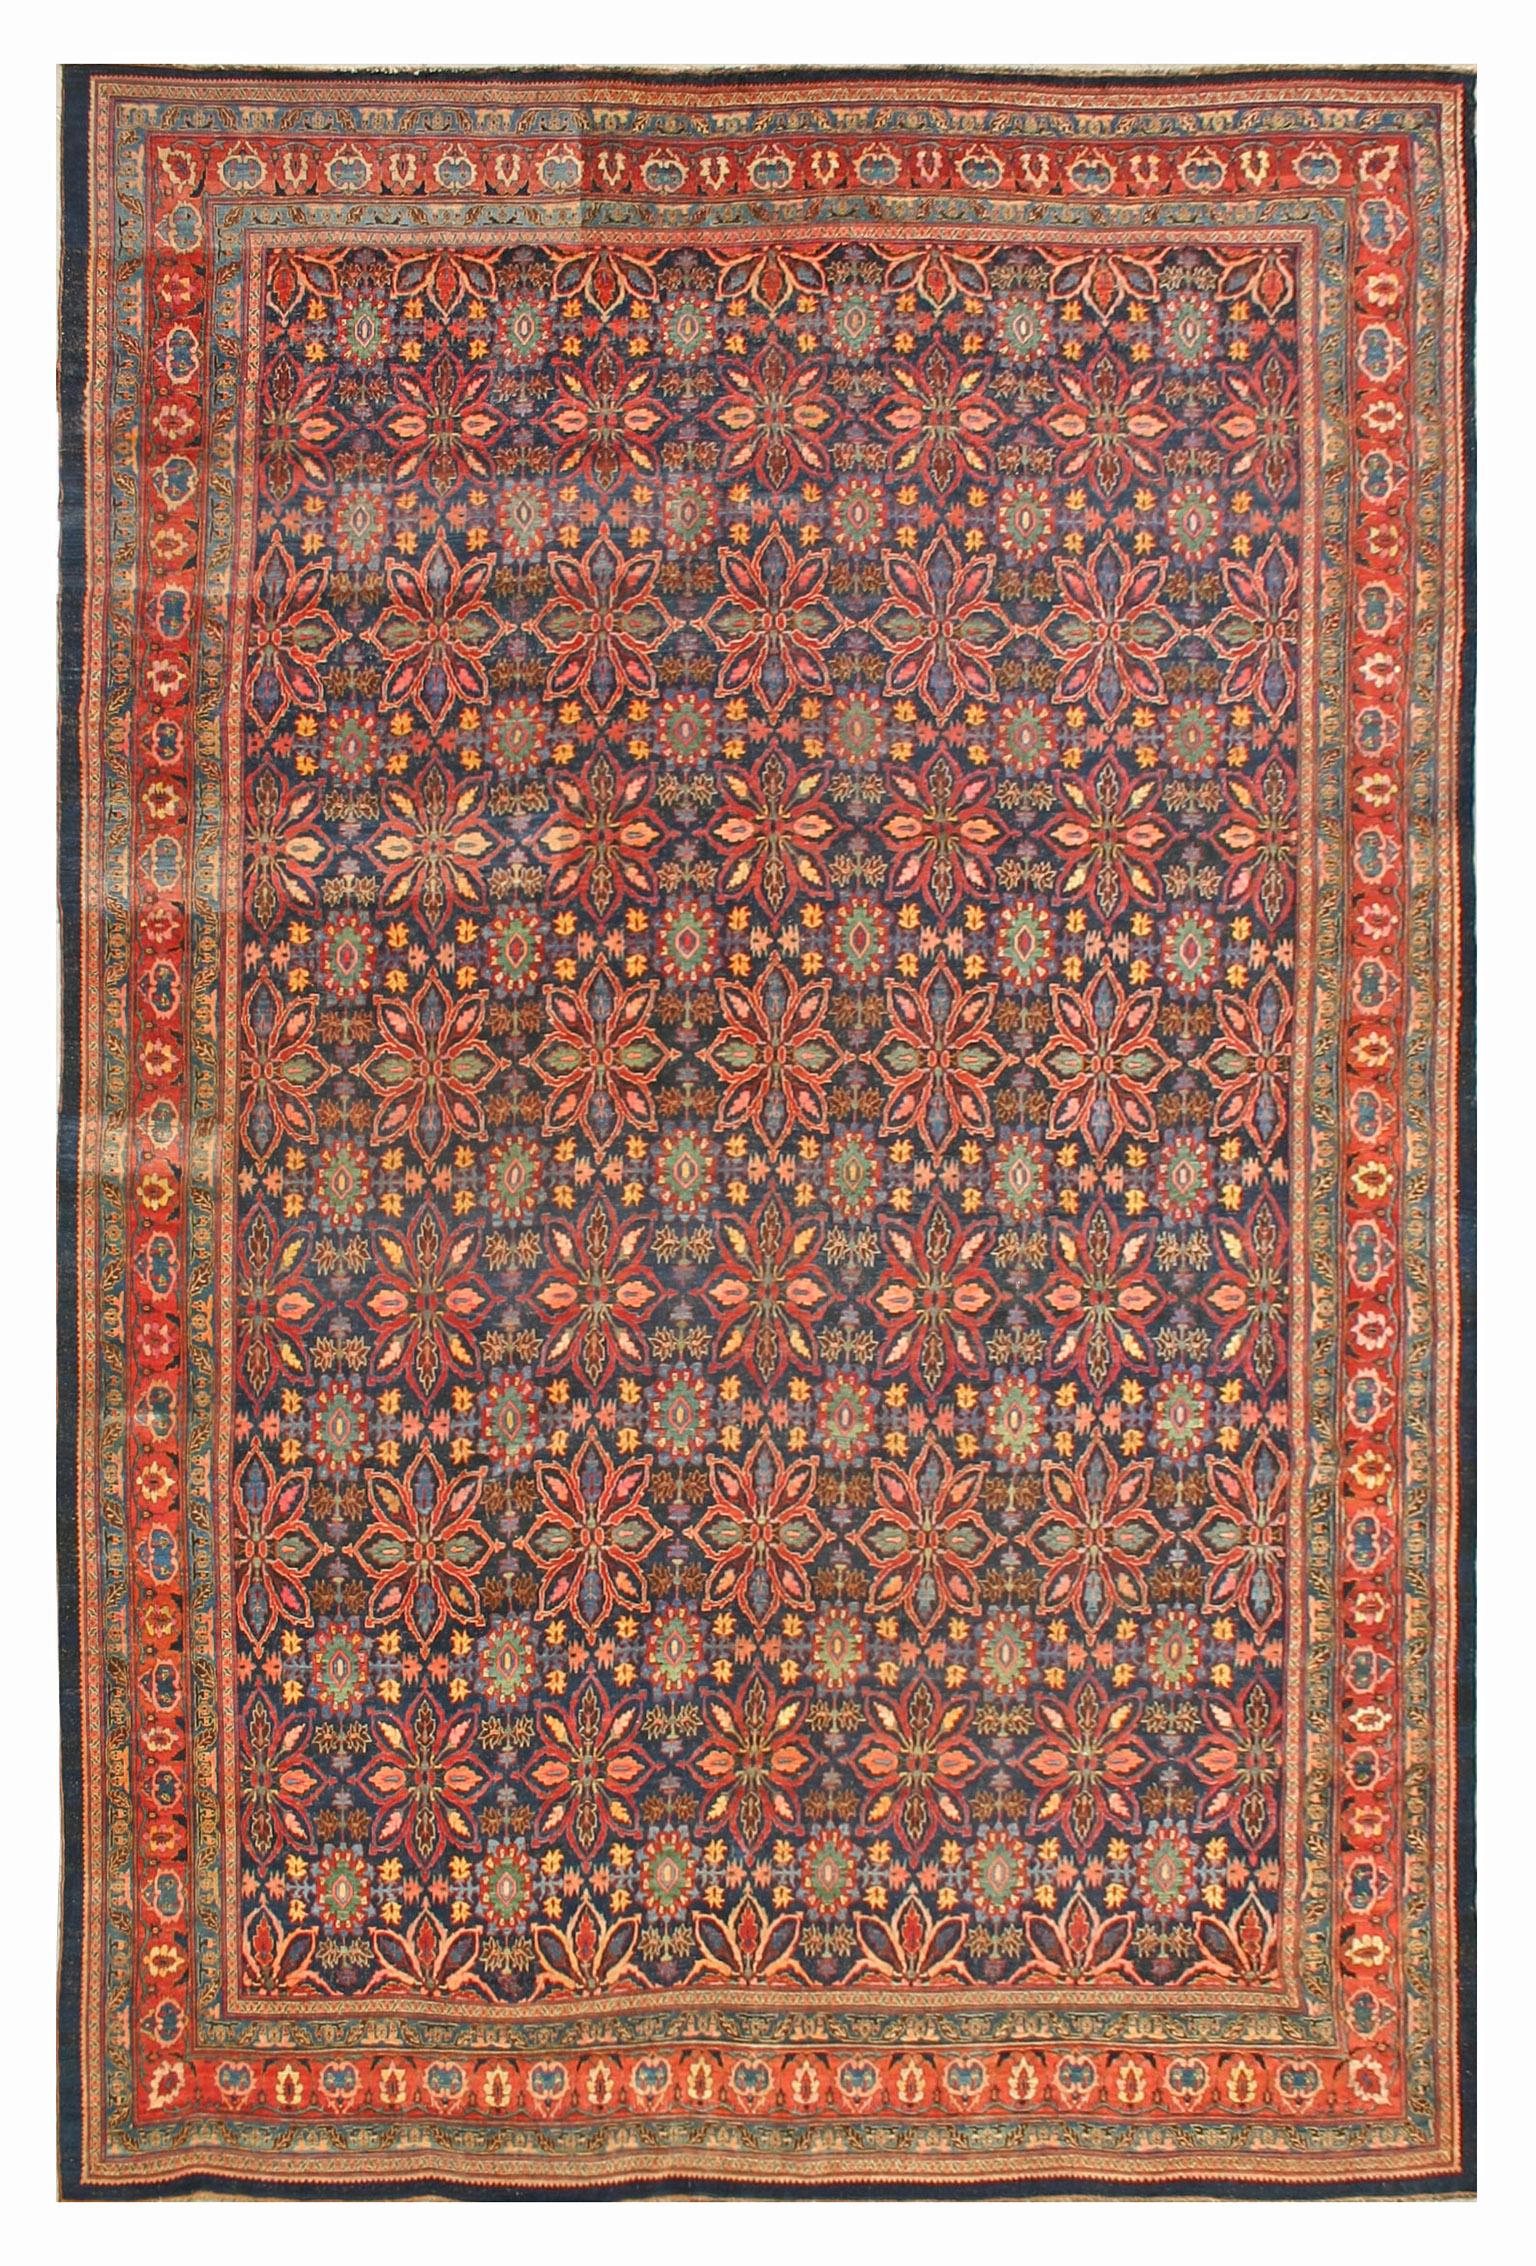 19th Century W. Persian Bijar Carpet ( 15'8" x 23'8" - 478 x 722 ) For Sale